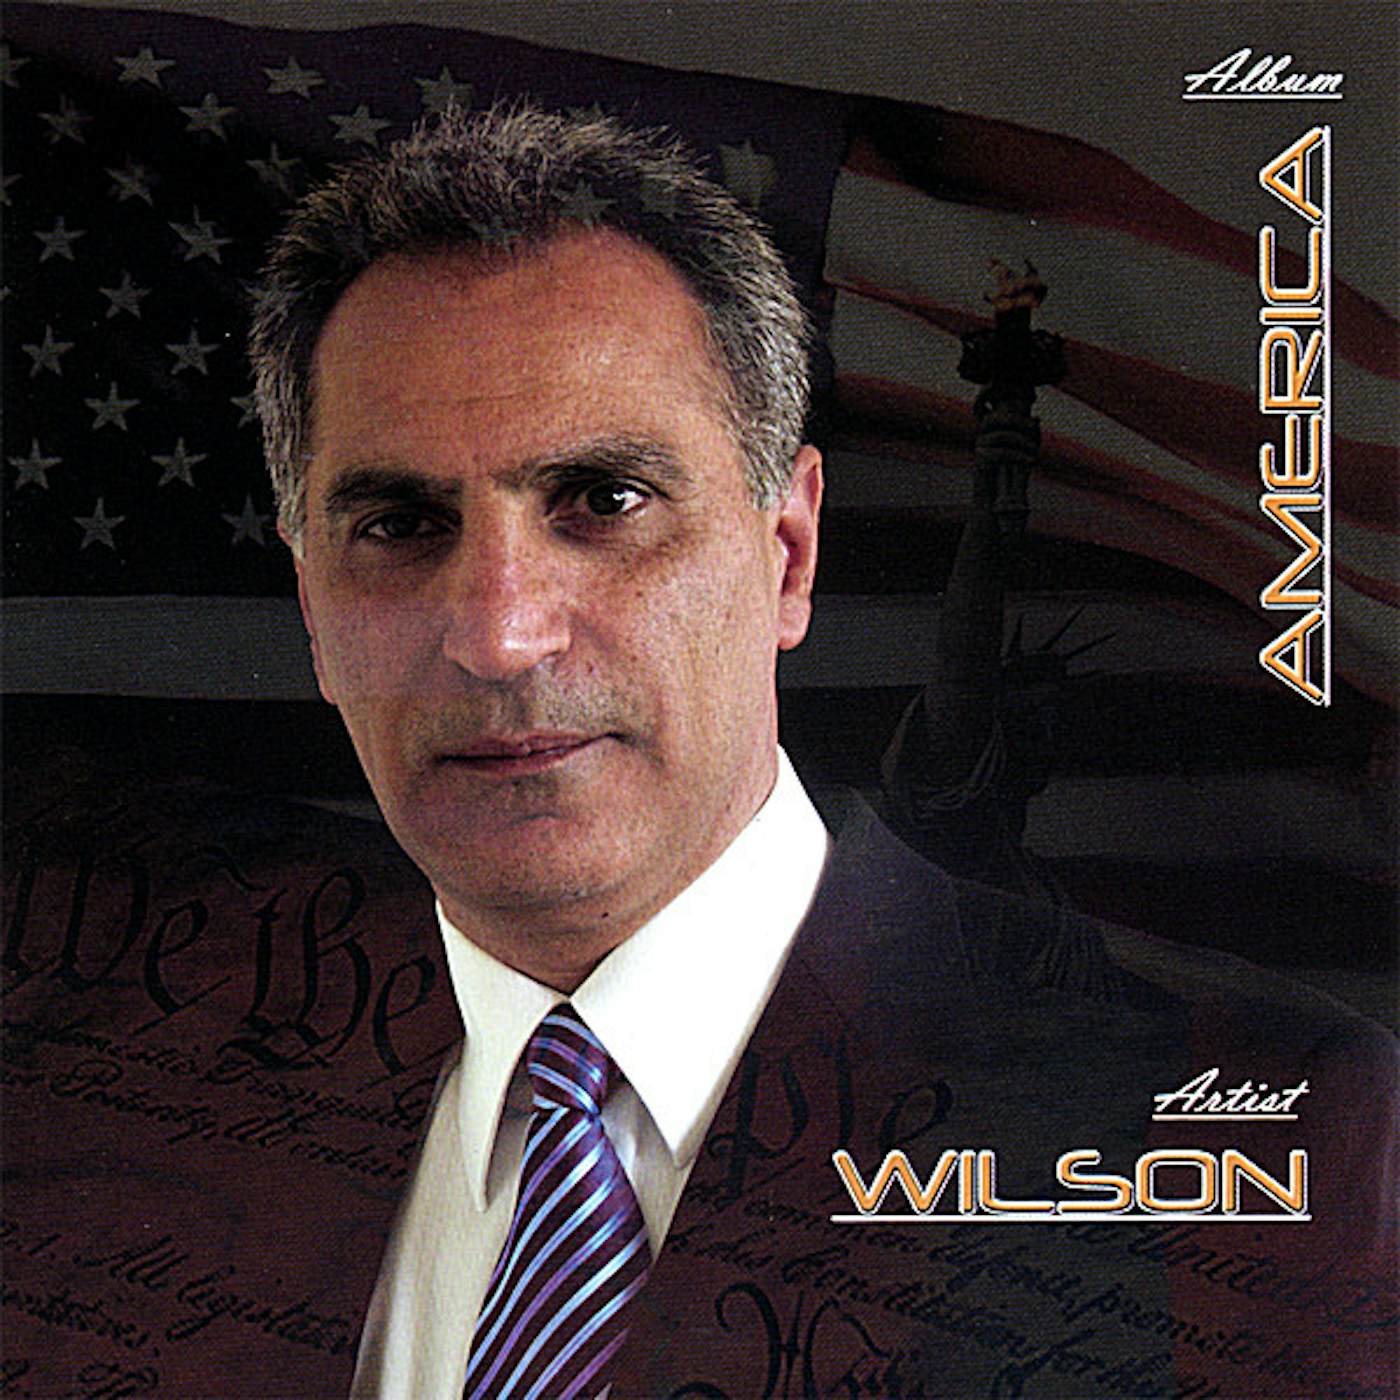 Wilson AMERICA CD